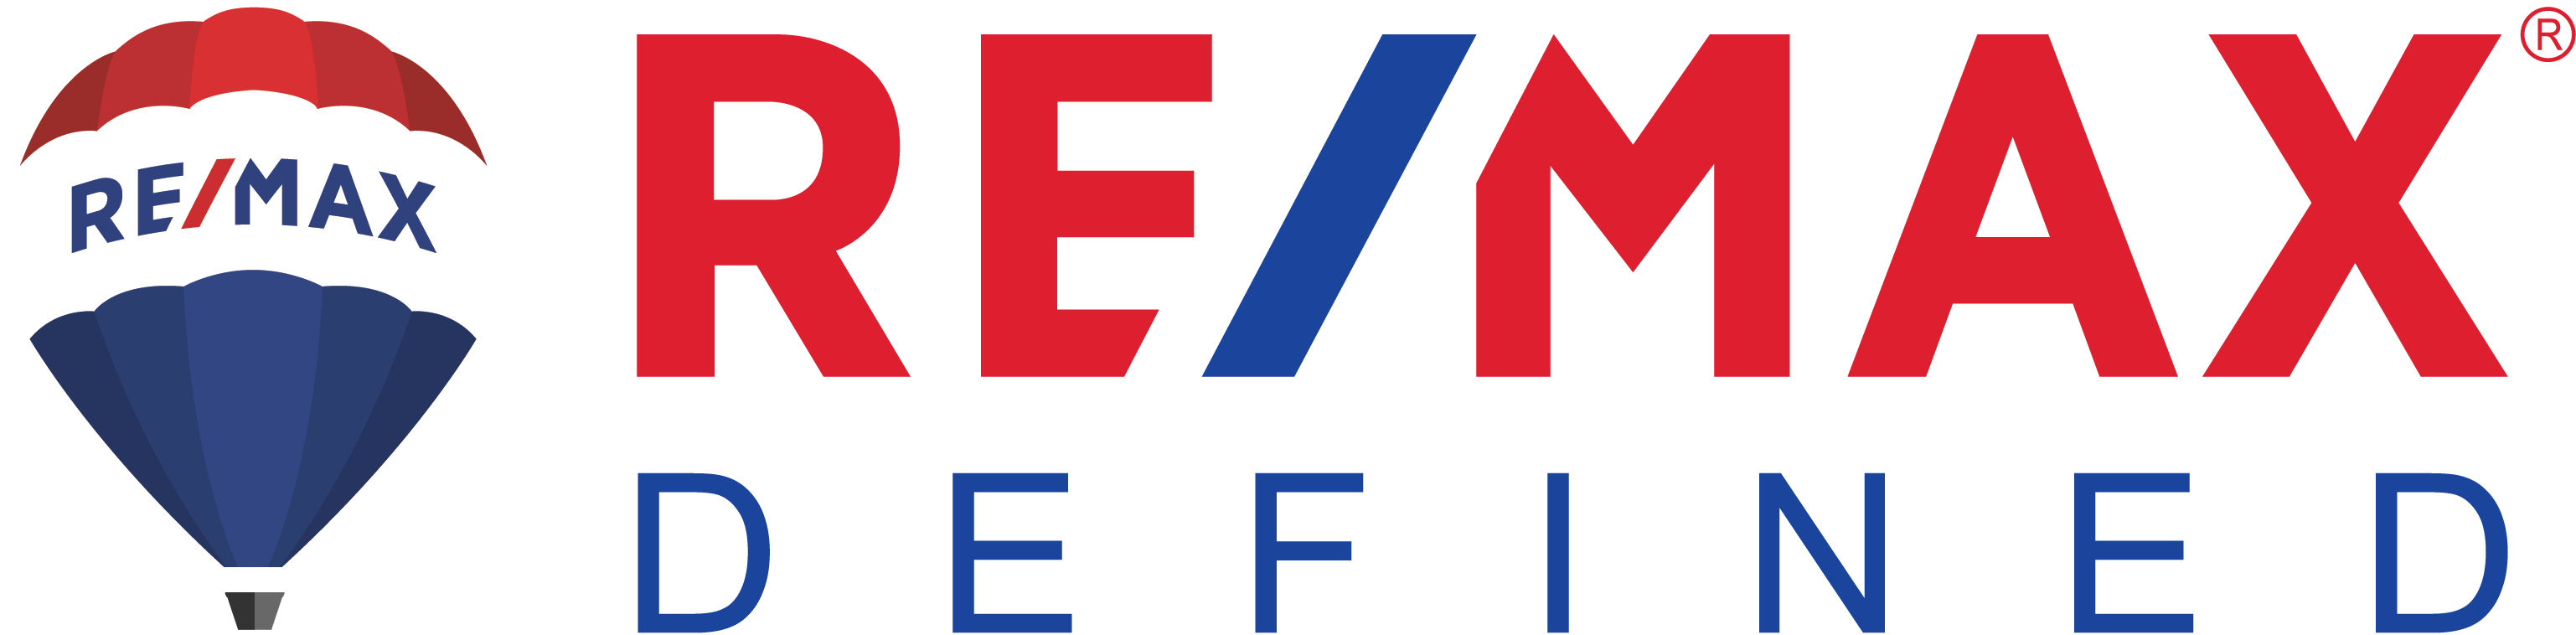 Remax Defined Logo